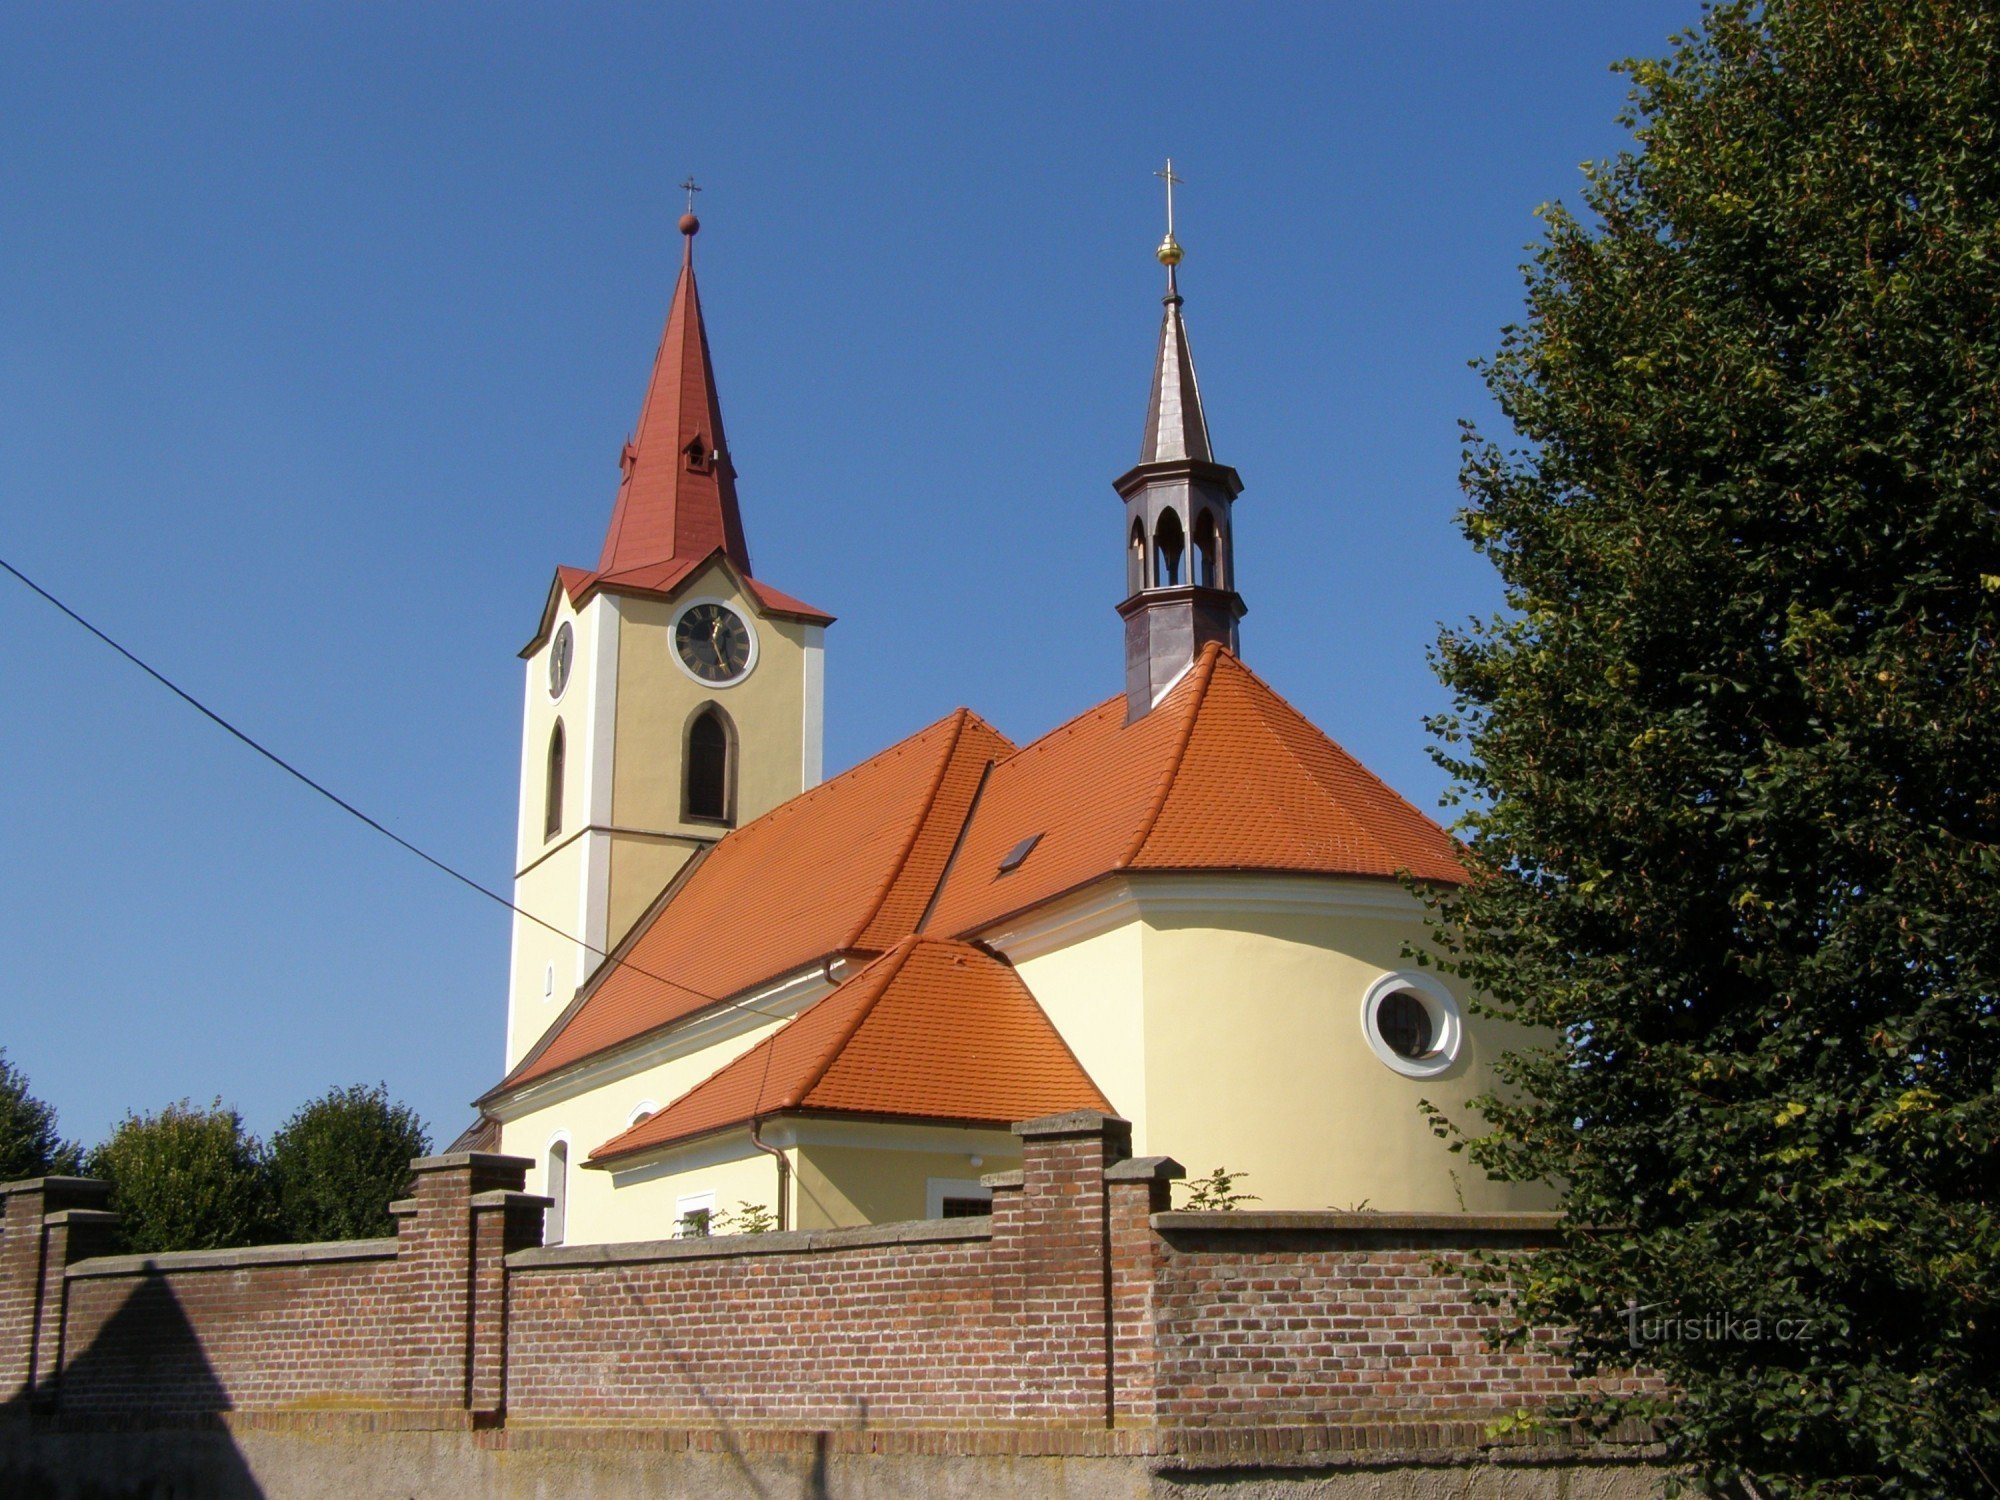 Jasenná - cerkev sv. Jurija